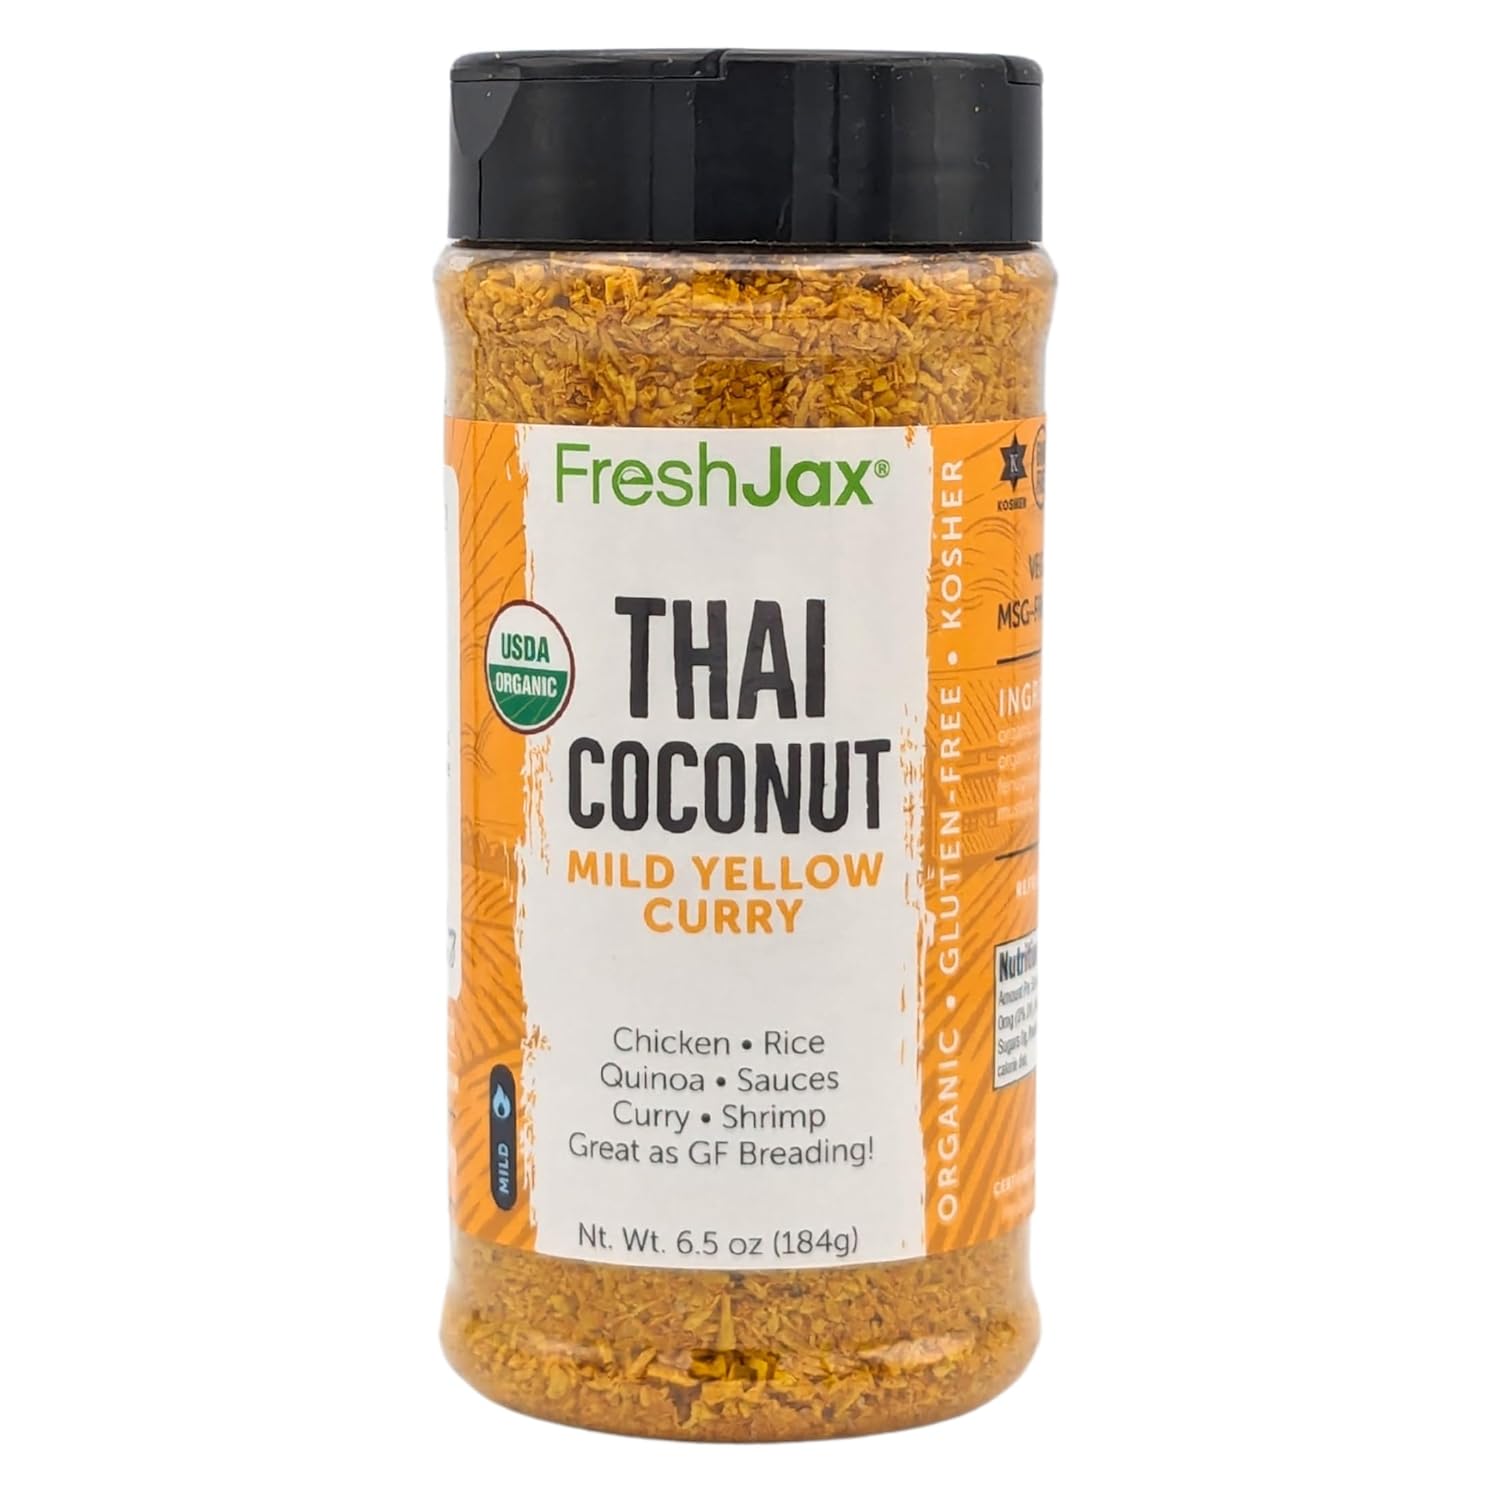 FreshJax Organic Spices - Gourmet Thai Coconut Curry Mild - Yellow - XL Bottle - Coconut Shrimp - Gluten Free Breading